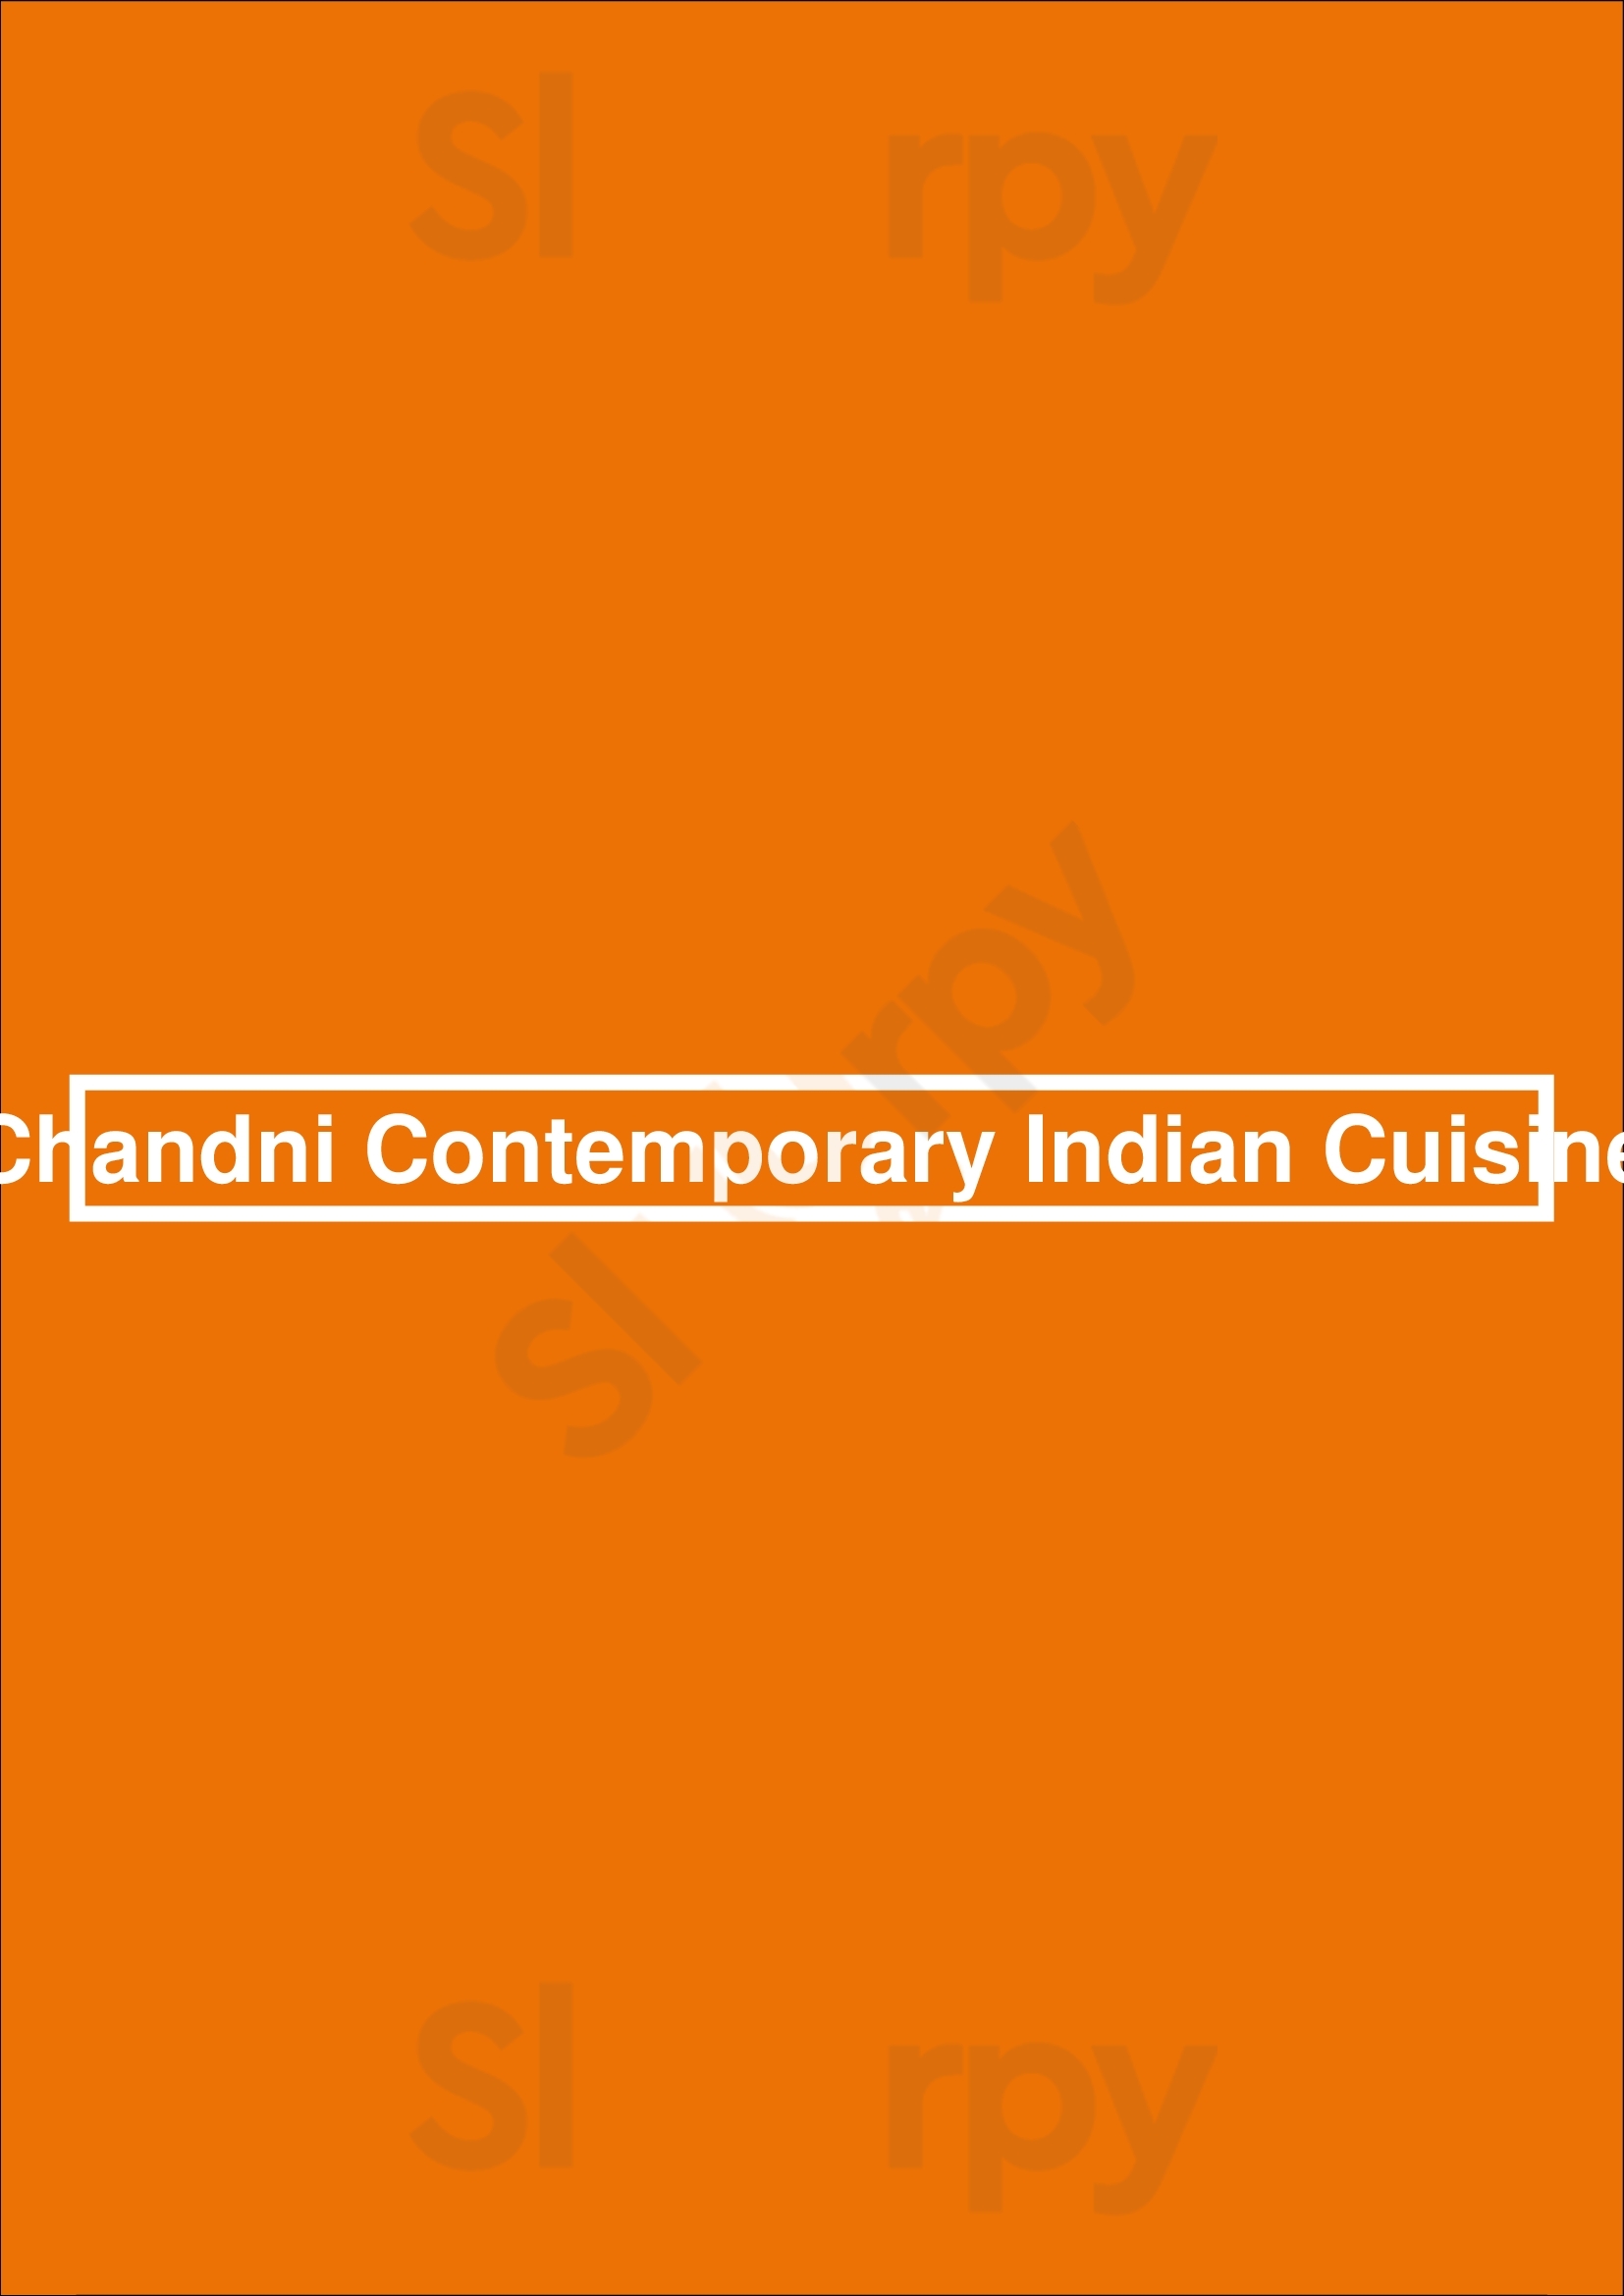 Chandni Contemporary Indian Cuisine Orpington Menu - 1